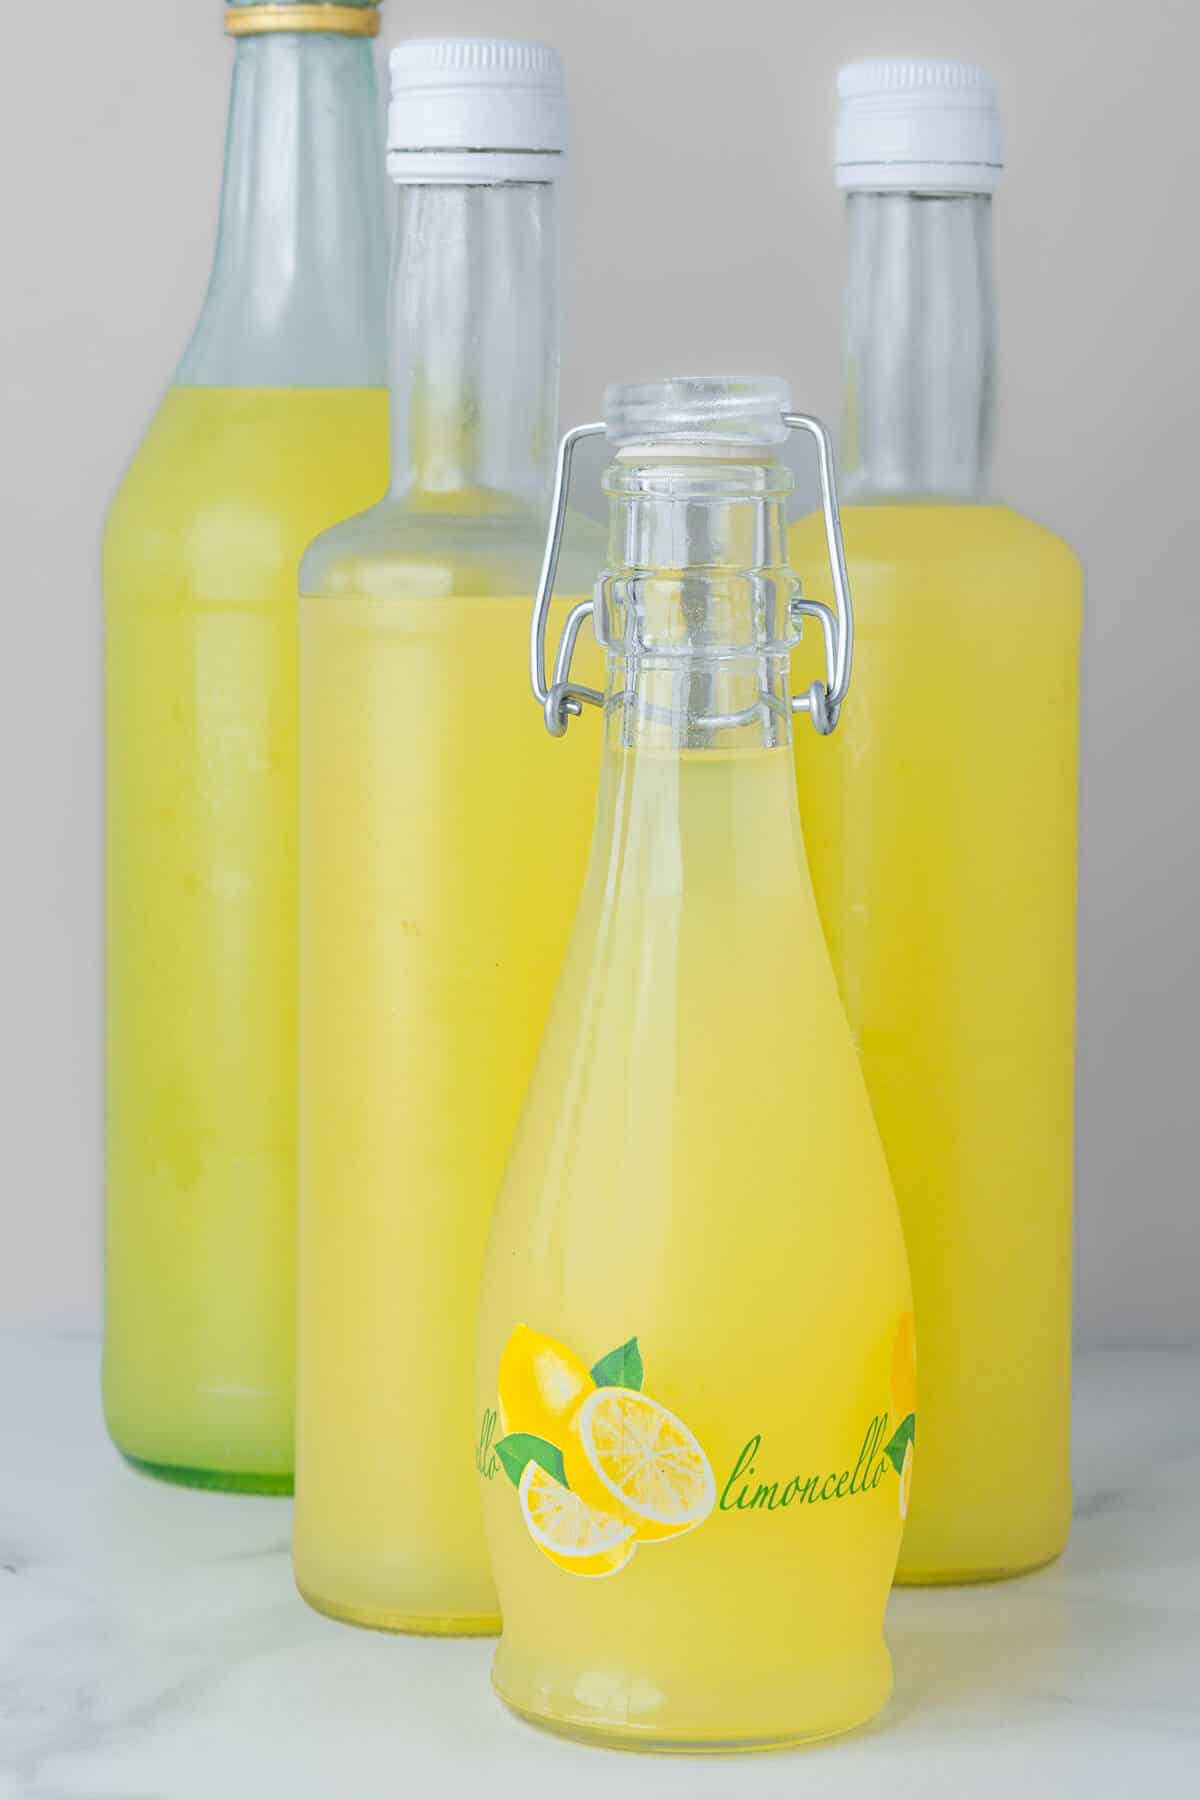 Glass bottles of limoncello